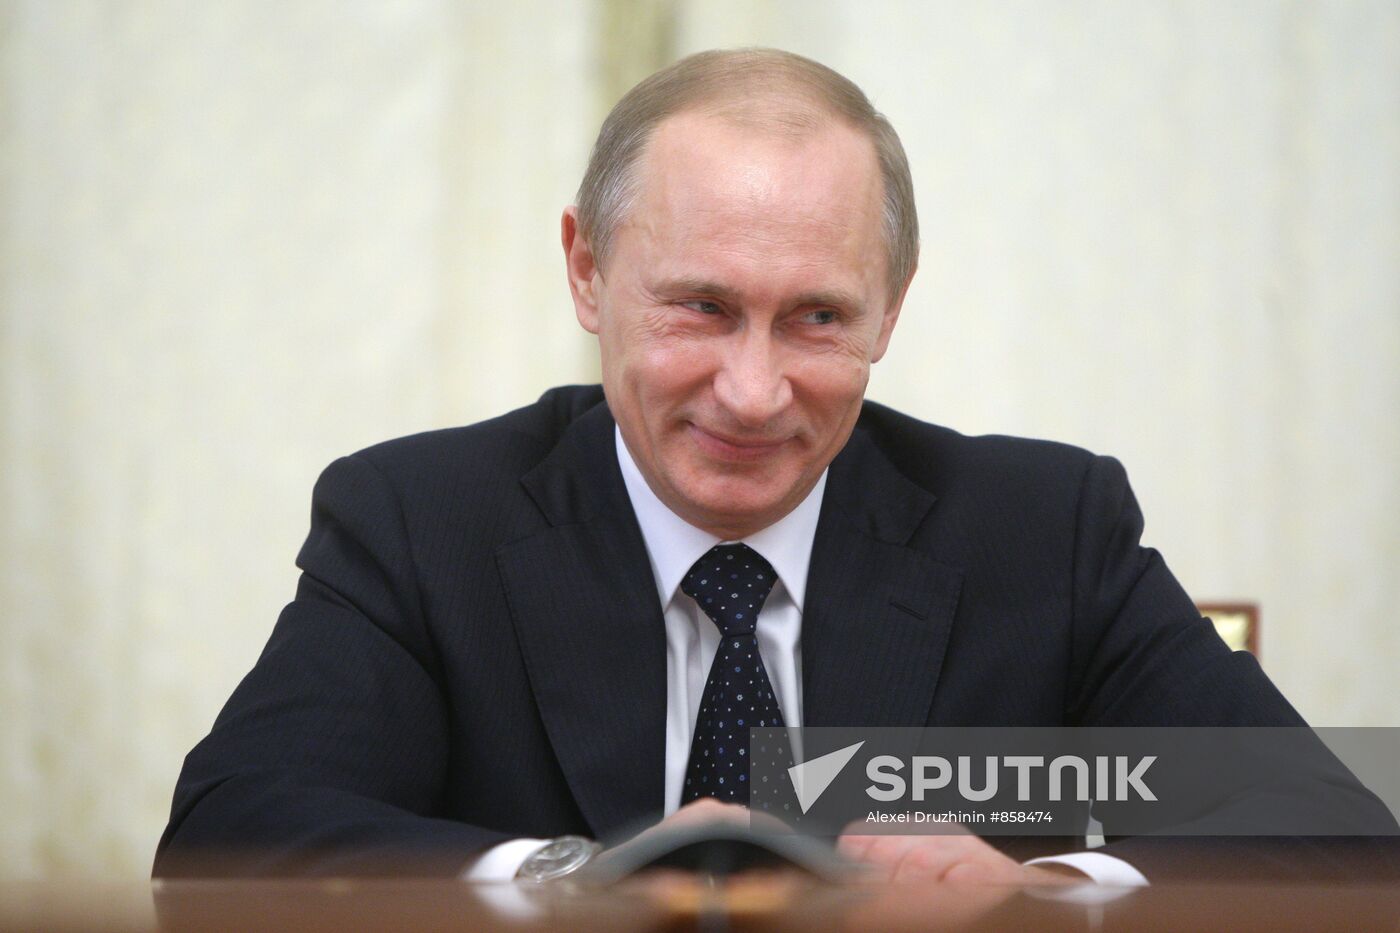 Vladimir Putin holds teleconference on Student Games in Kazan